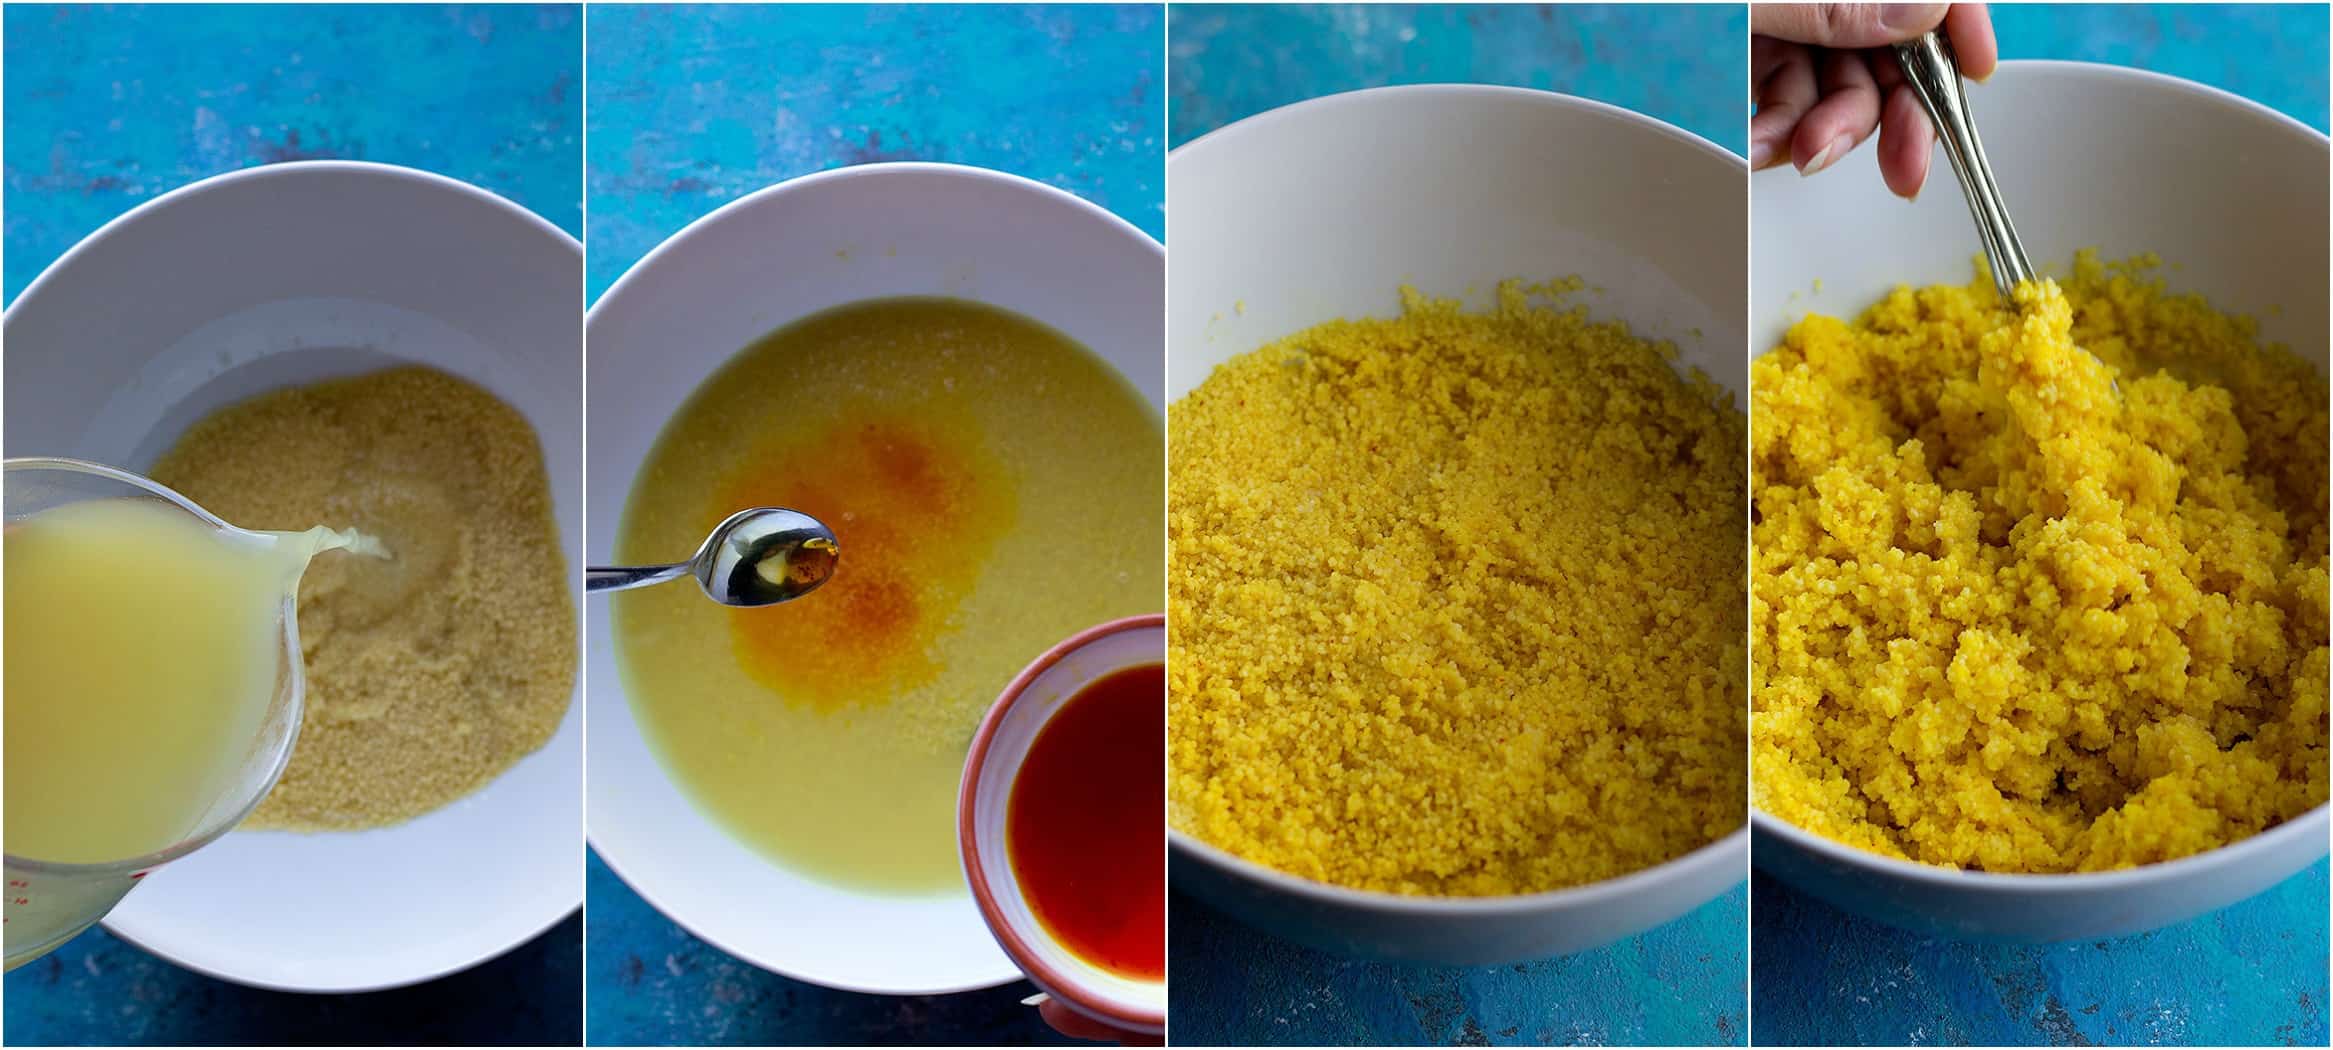 To make saffron couscous mix couscous with saffron and chicken stock let it sit for 12 minutes and serve. 